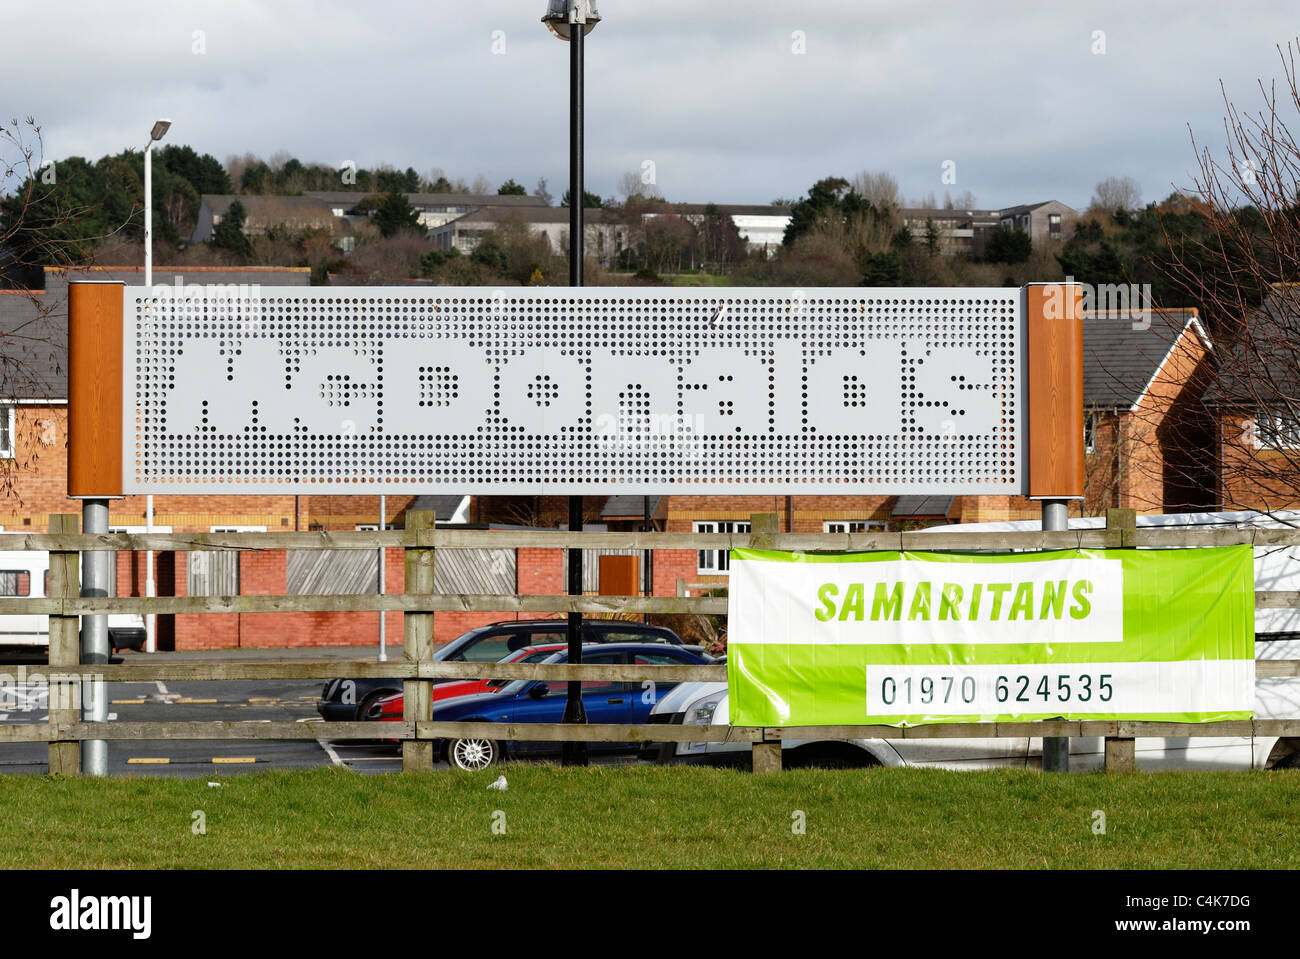 Indicazioni per McDonalds un ristorante fast food e i samaritani helpline adiacenti, Aberystwyth, Galles Foto Stock